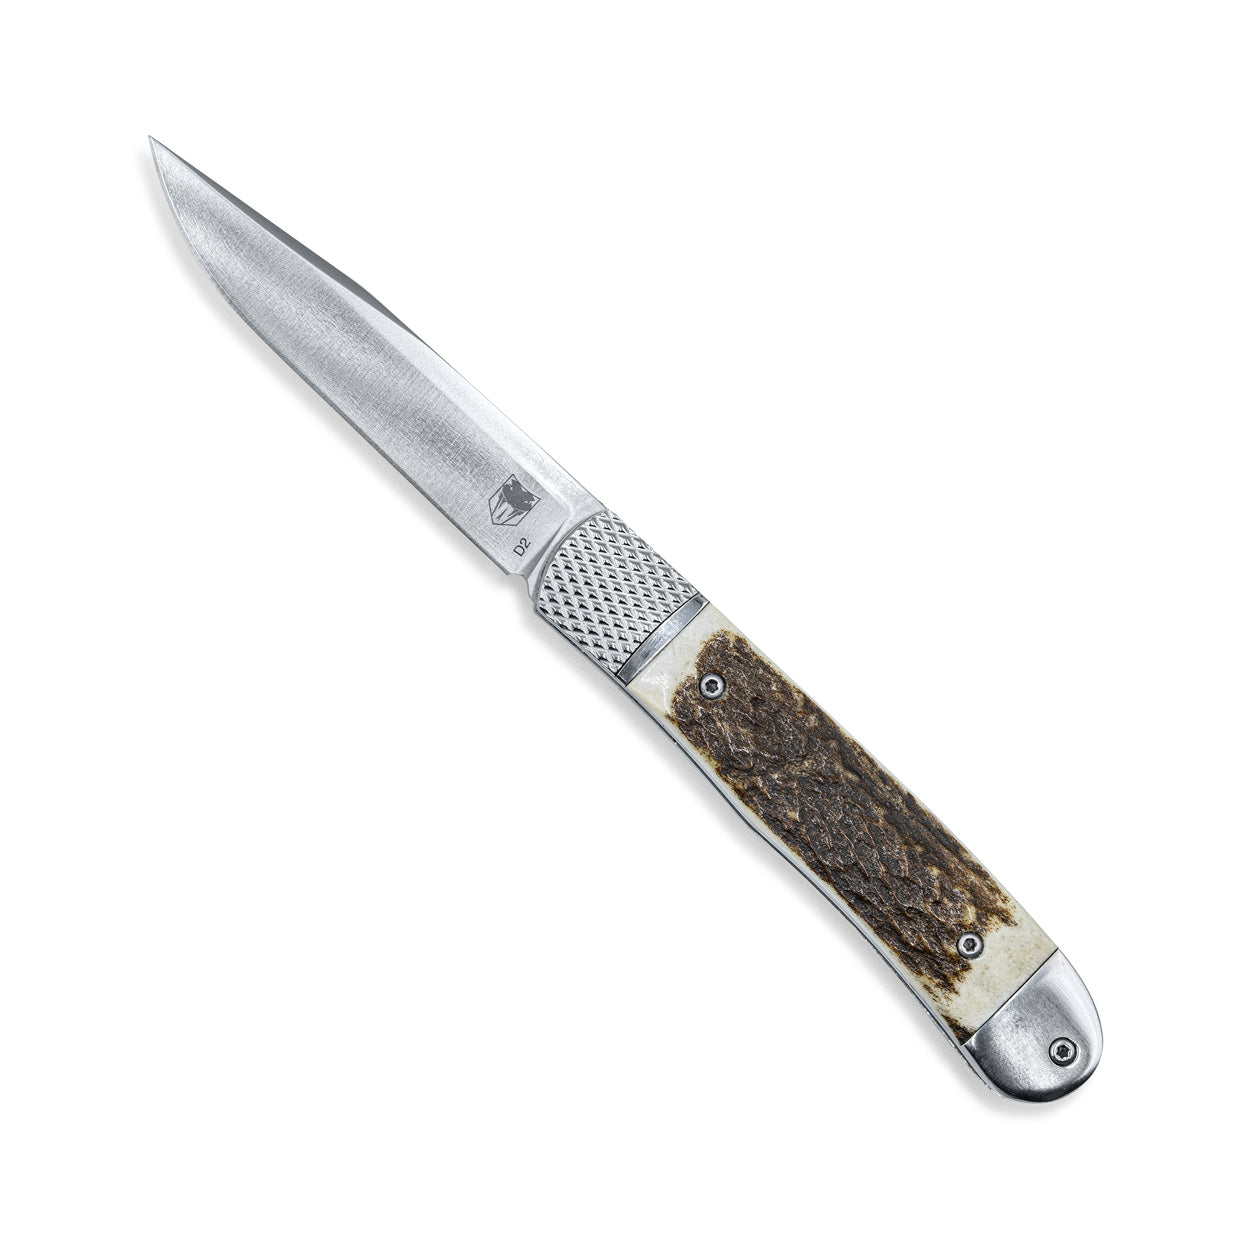 Multipurpose flex knife with stainless steel blade - Harvesting knives -  N001037 - Terrateck